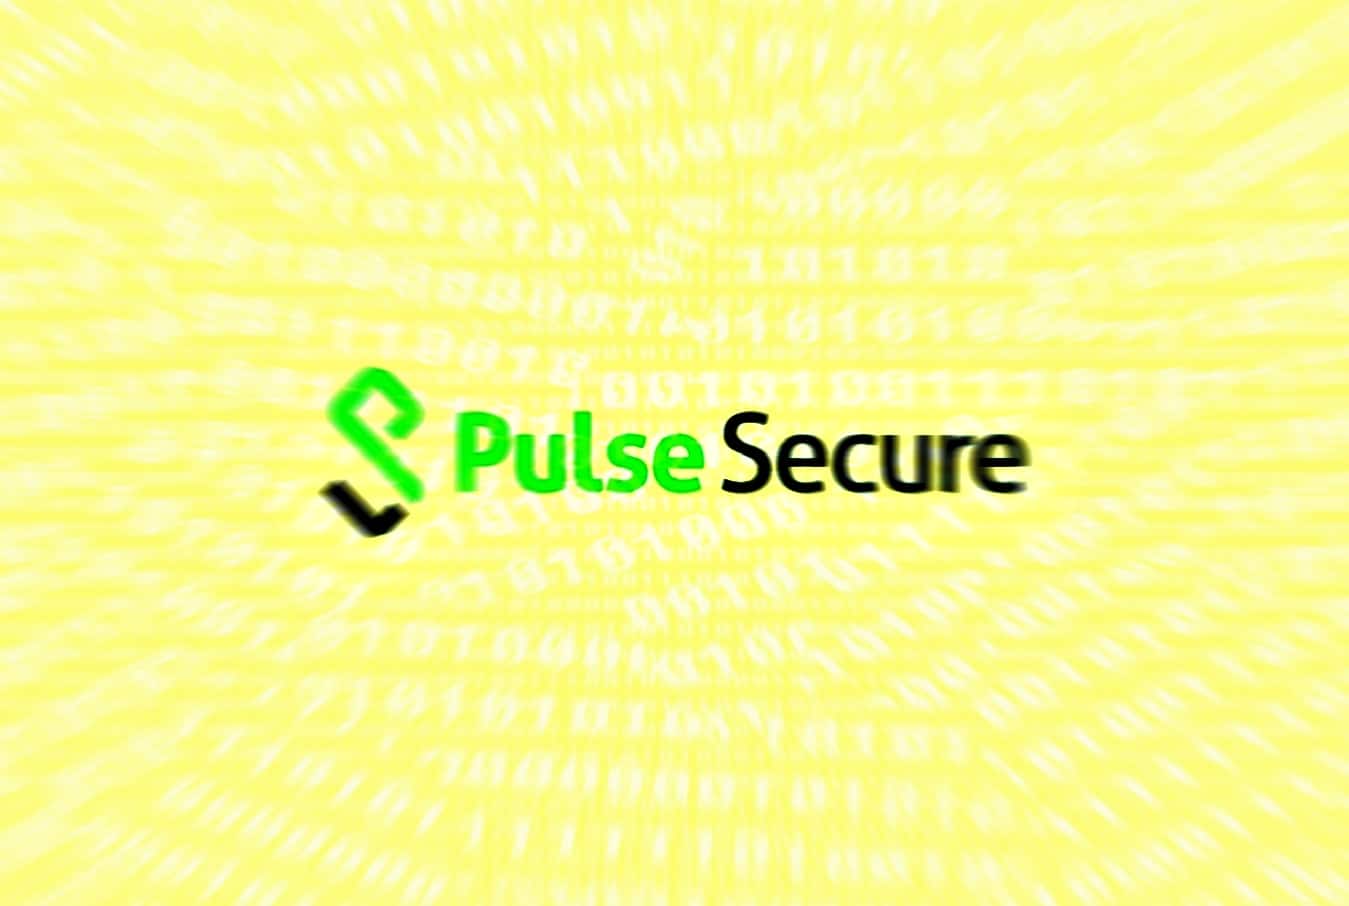 Sensitive data of 913 Pulse Secure VPN servers leaked on hacker forum